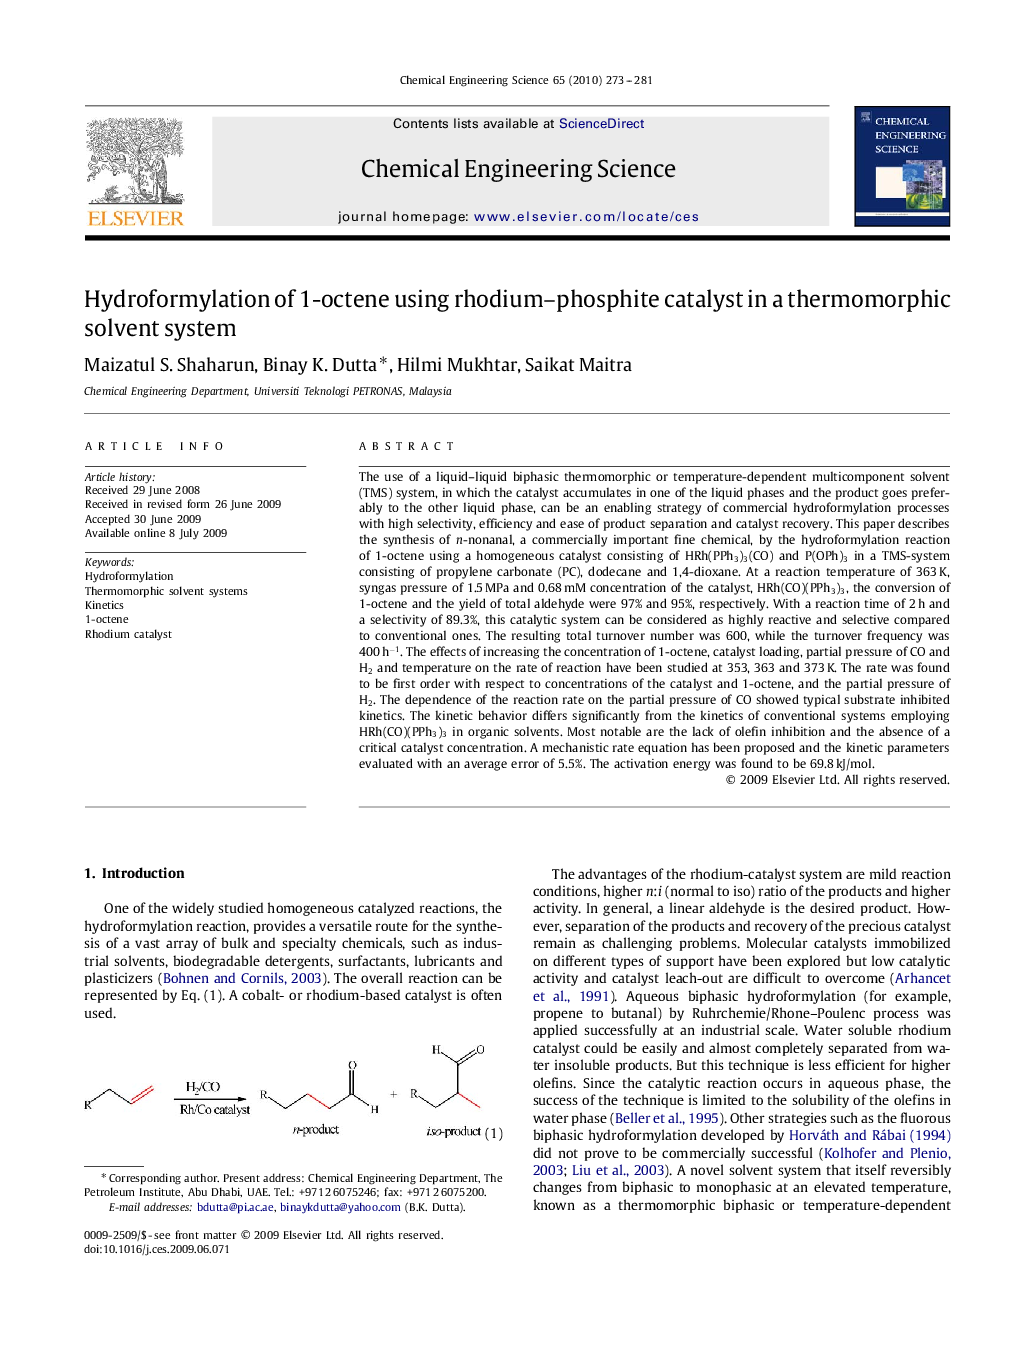 Hydroformylation of 1-octene using rhodium–phosphite catalyst in a thermomorphic solvent system